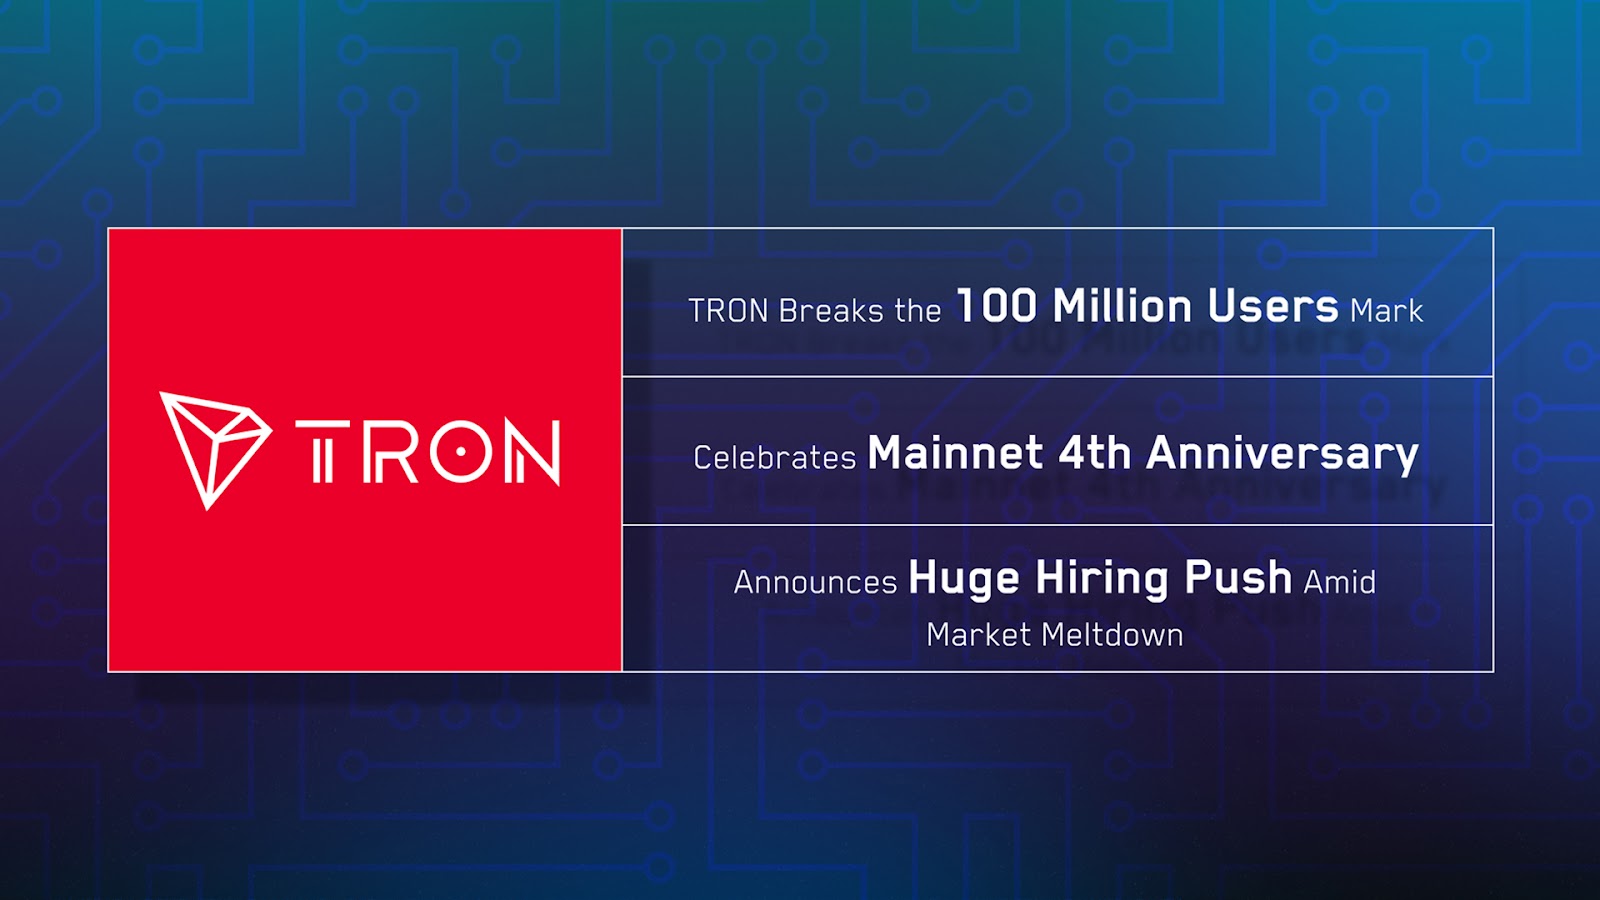 TRON Breaks the 100 Million Users Mark, Celebrates Mainnet 4th Anniversary, and Announces Huge Hiring Push Amid Market Meltdown - 1